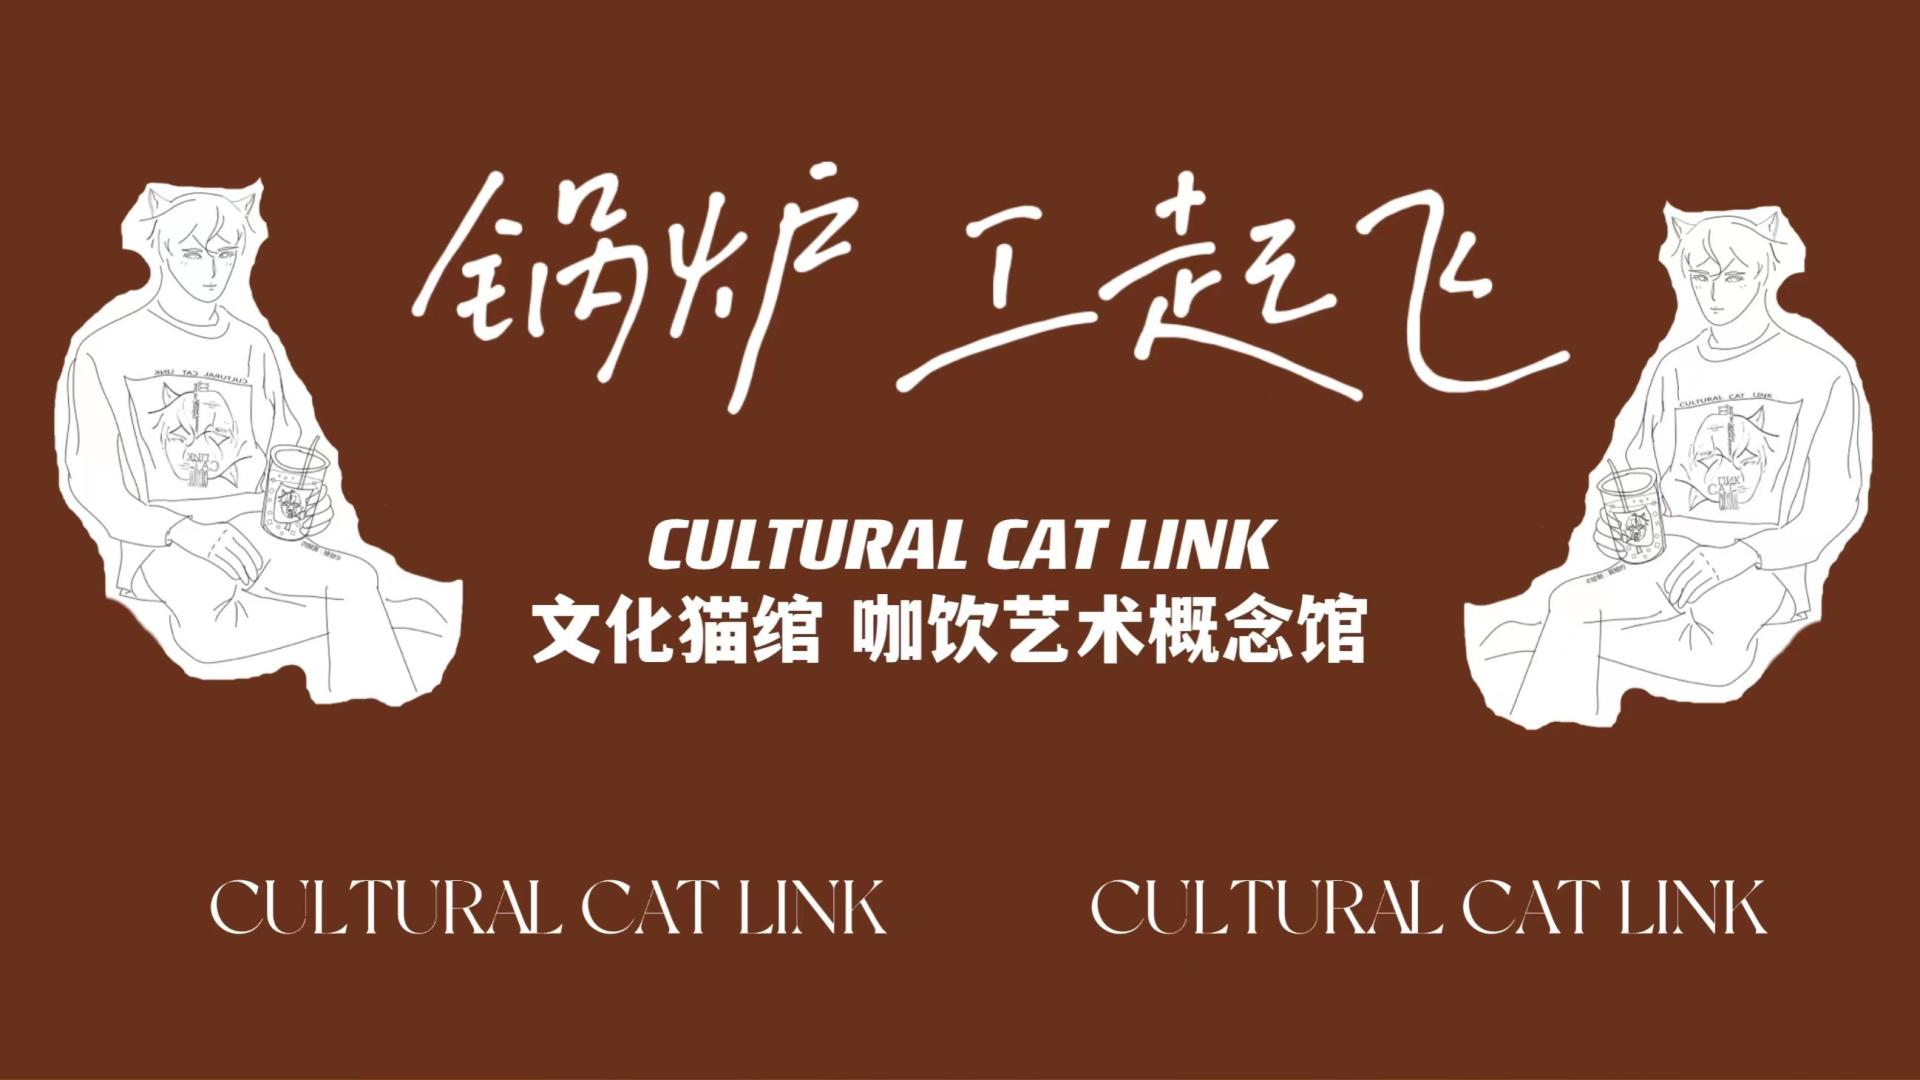 CULTURAL CAT LINK丨道长的日常森活